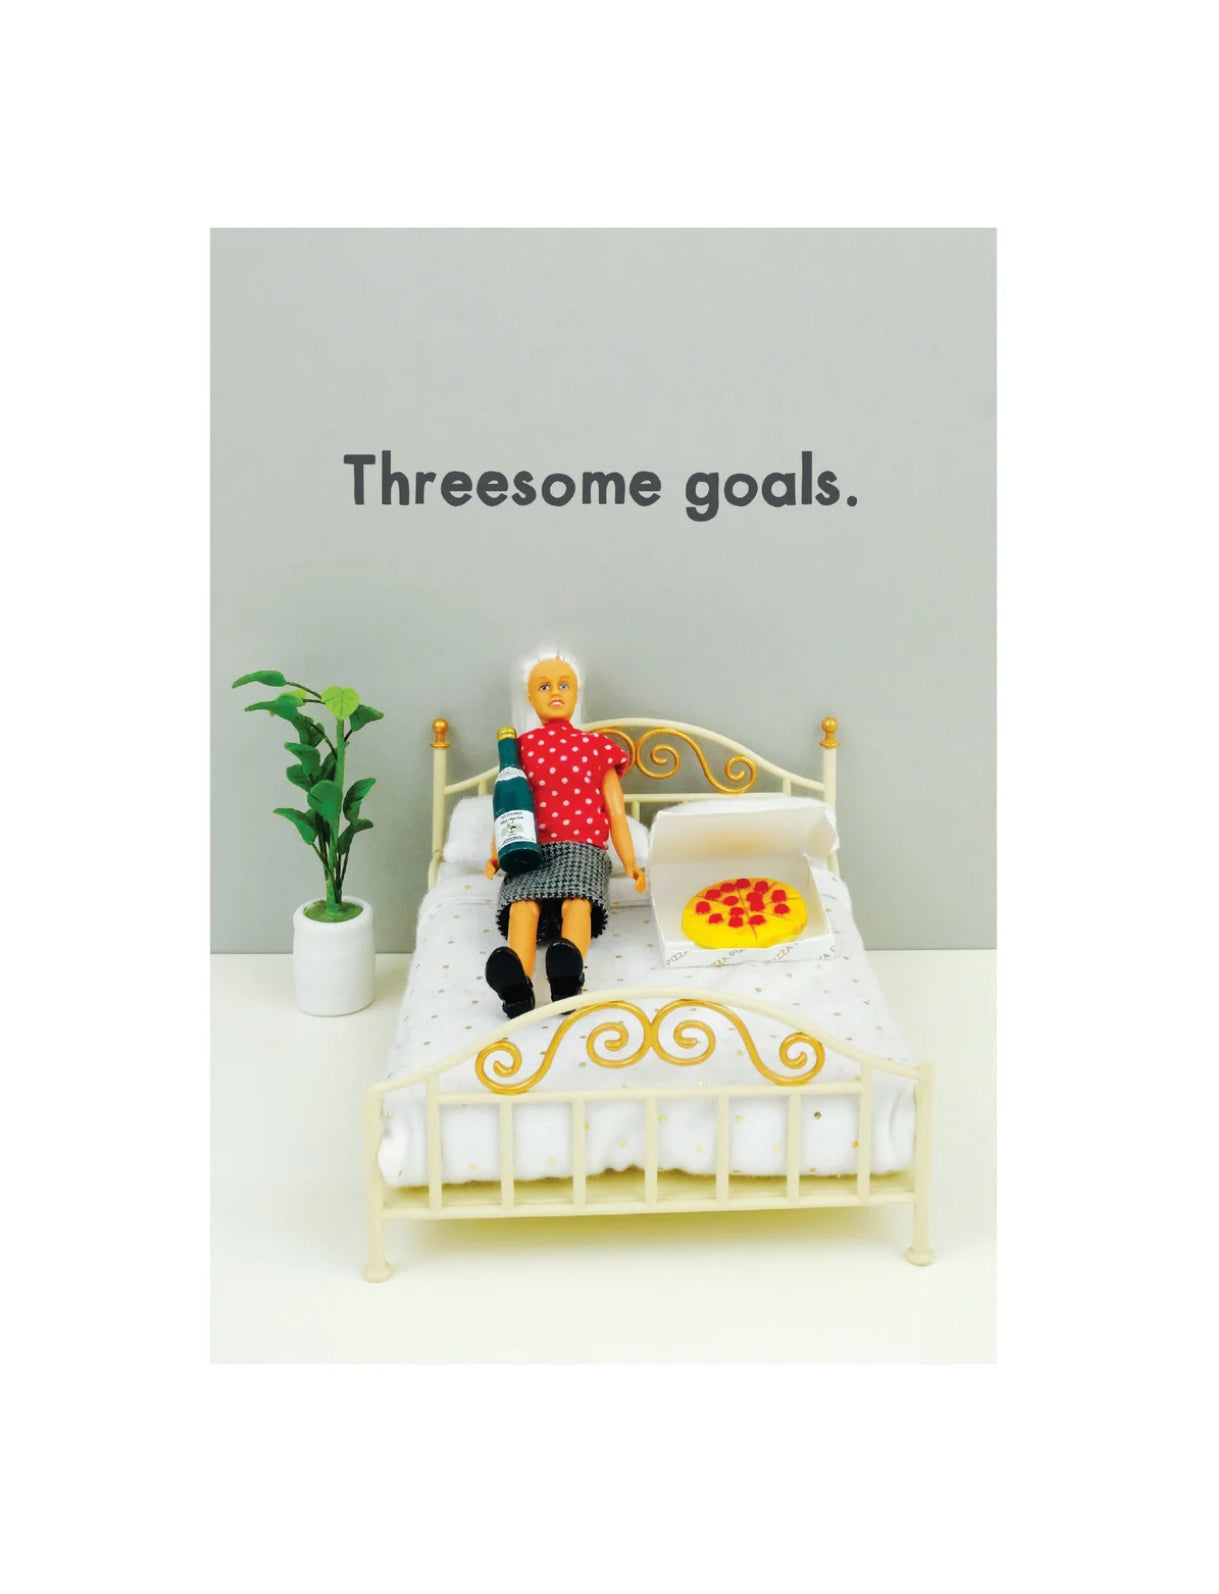 Threesome Goals Card